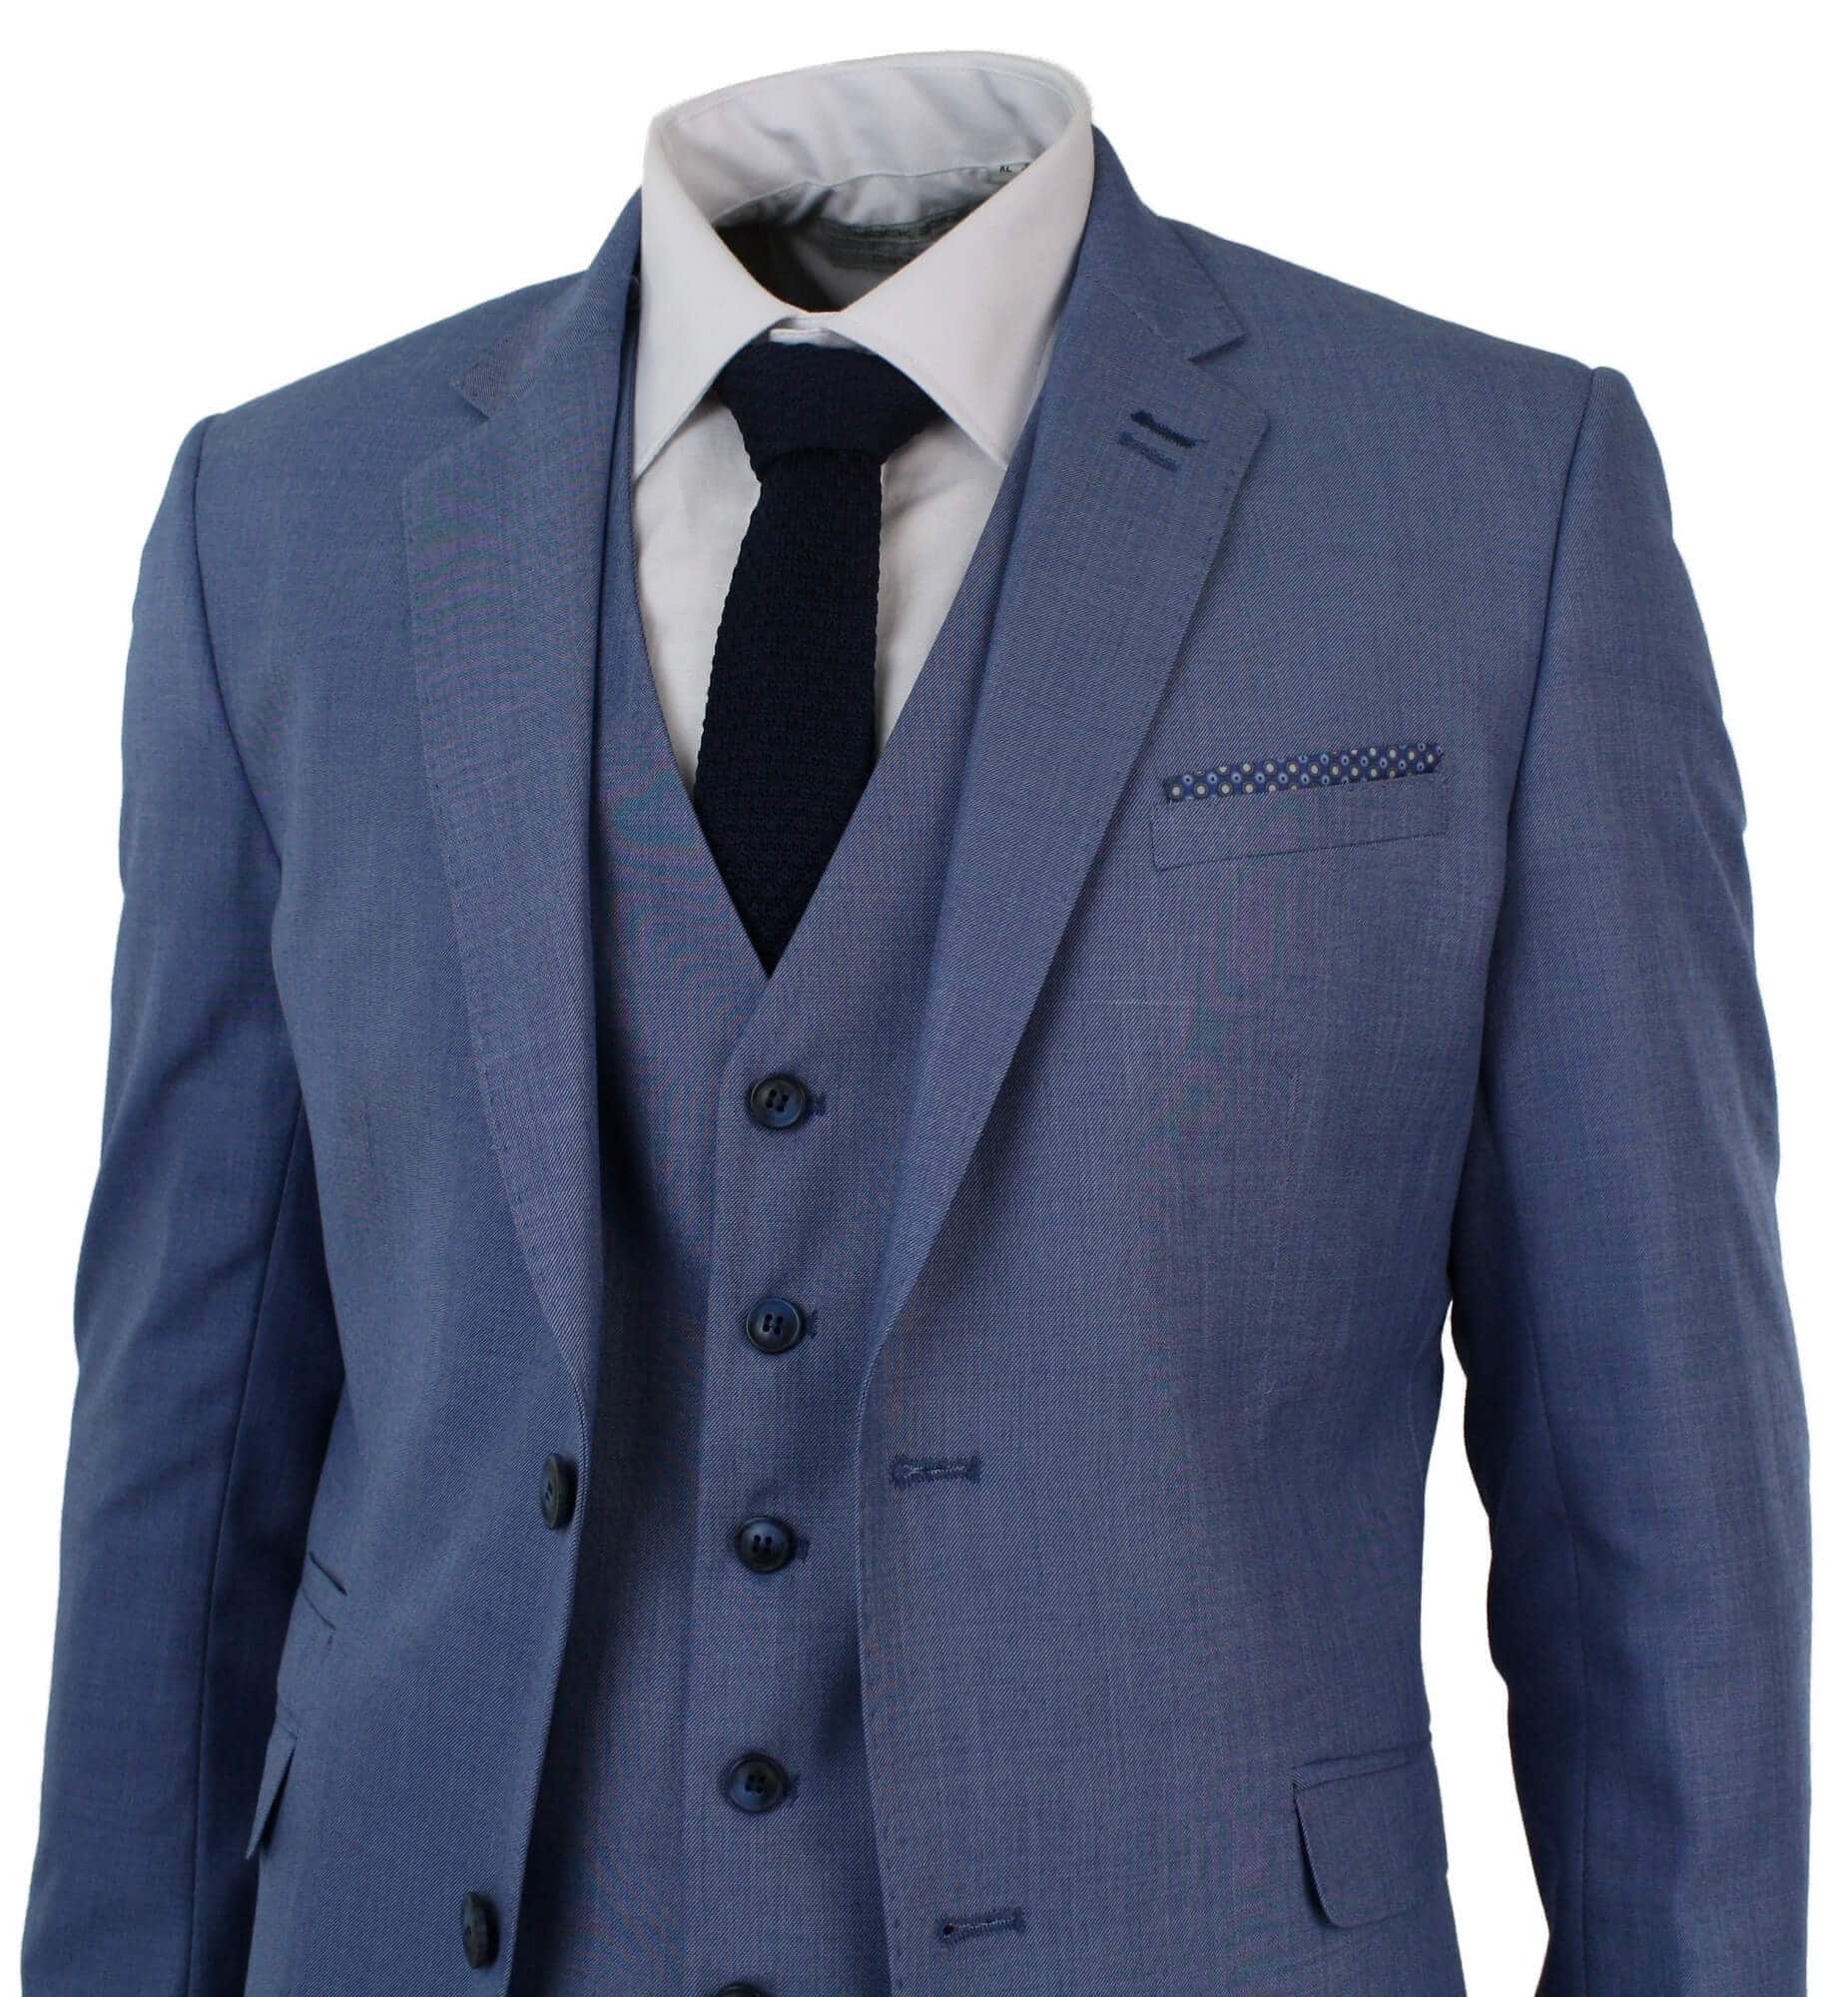 Mens Light Blue 3 Piece Suit, Tailored Fit: Buy Online - Happy Gentleman